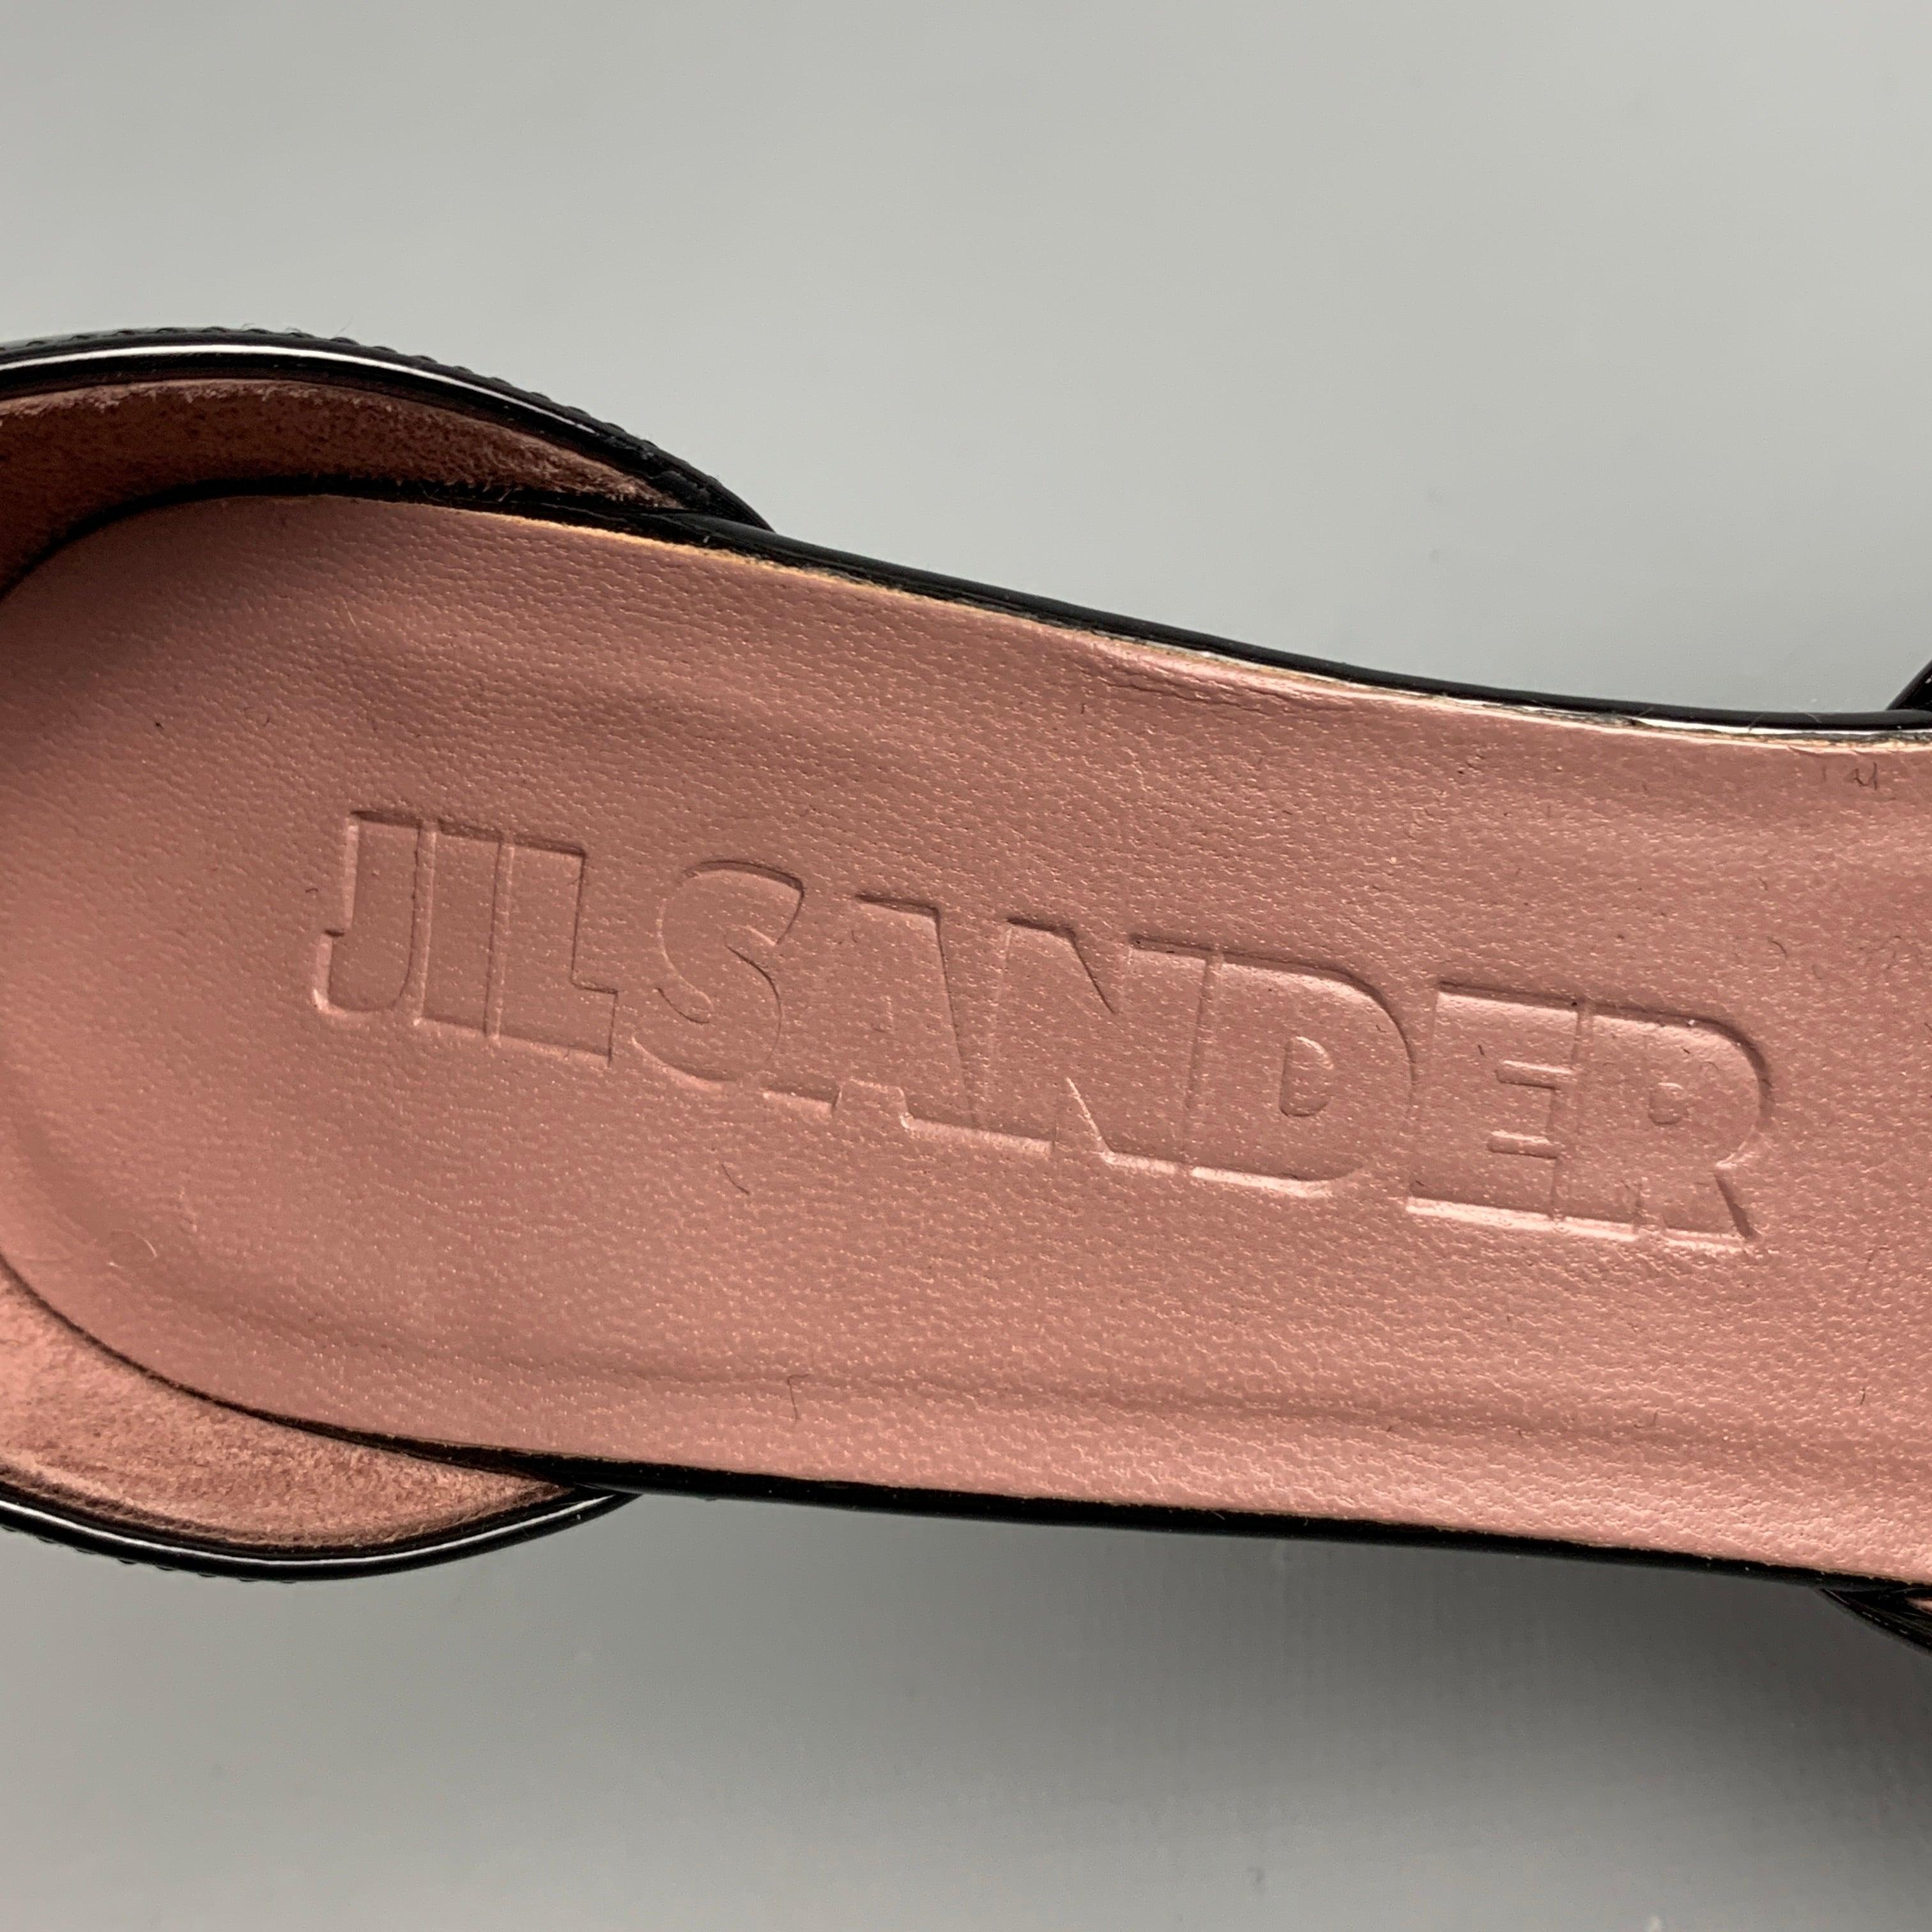 JIL SANDER Size 6.5 Black & Nude Color Block Patent Leather Pumps For Sale 2